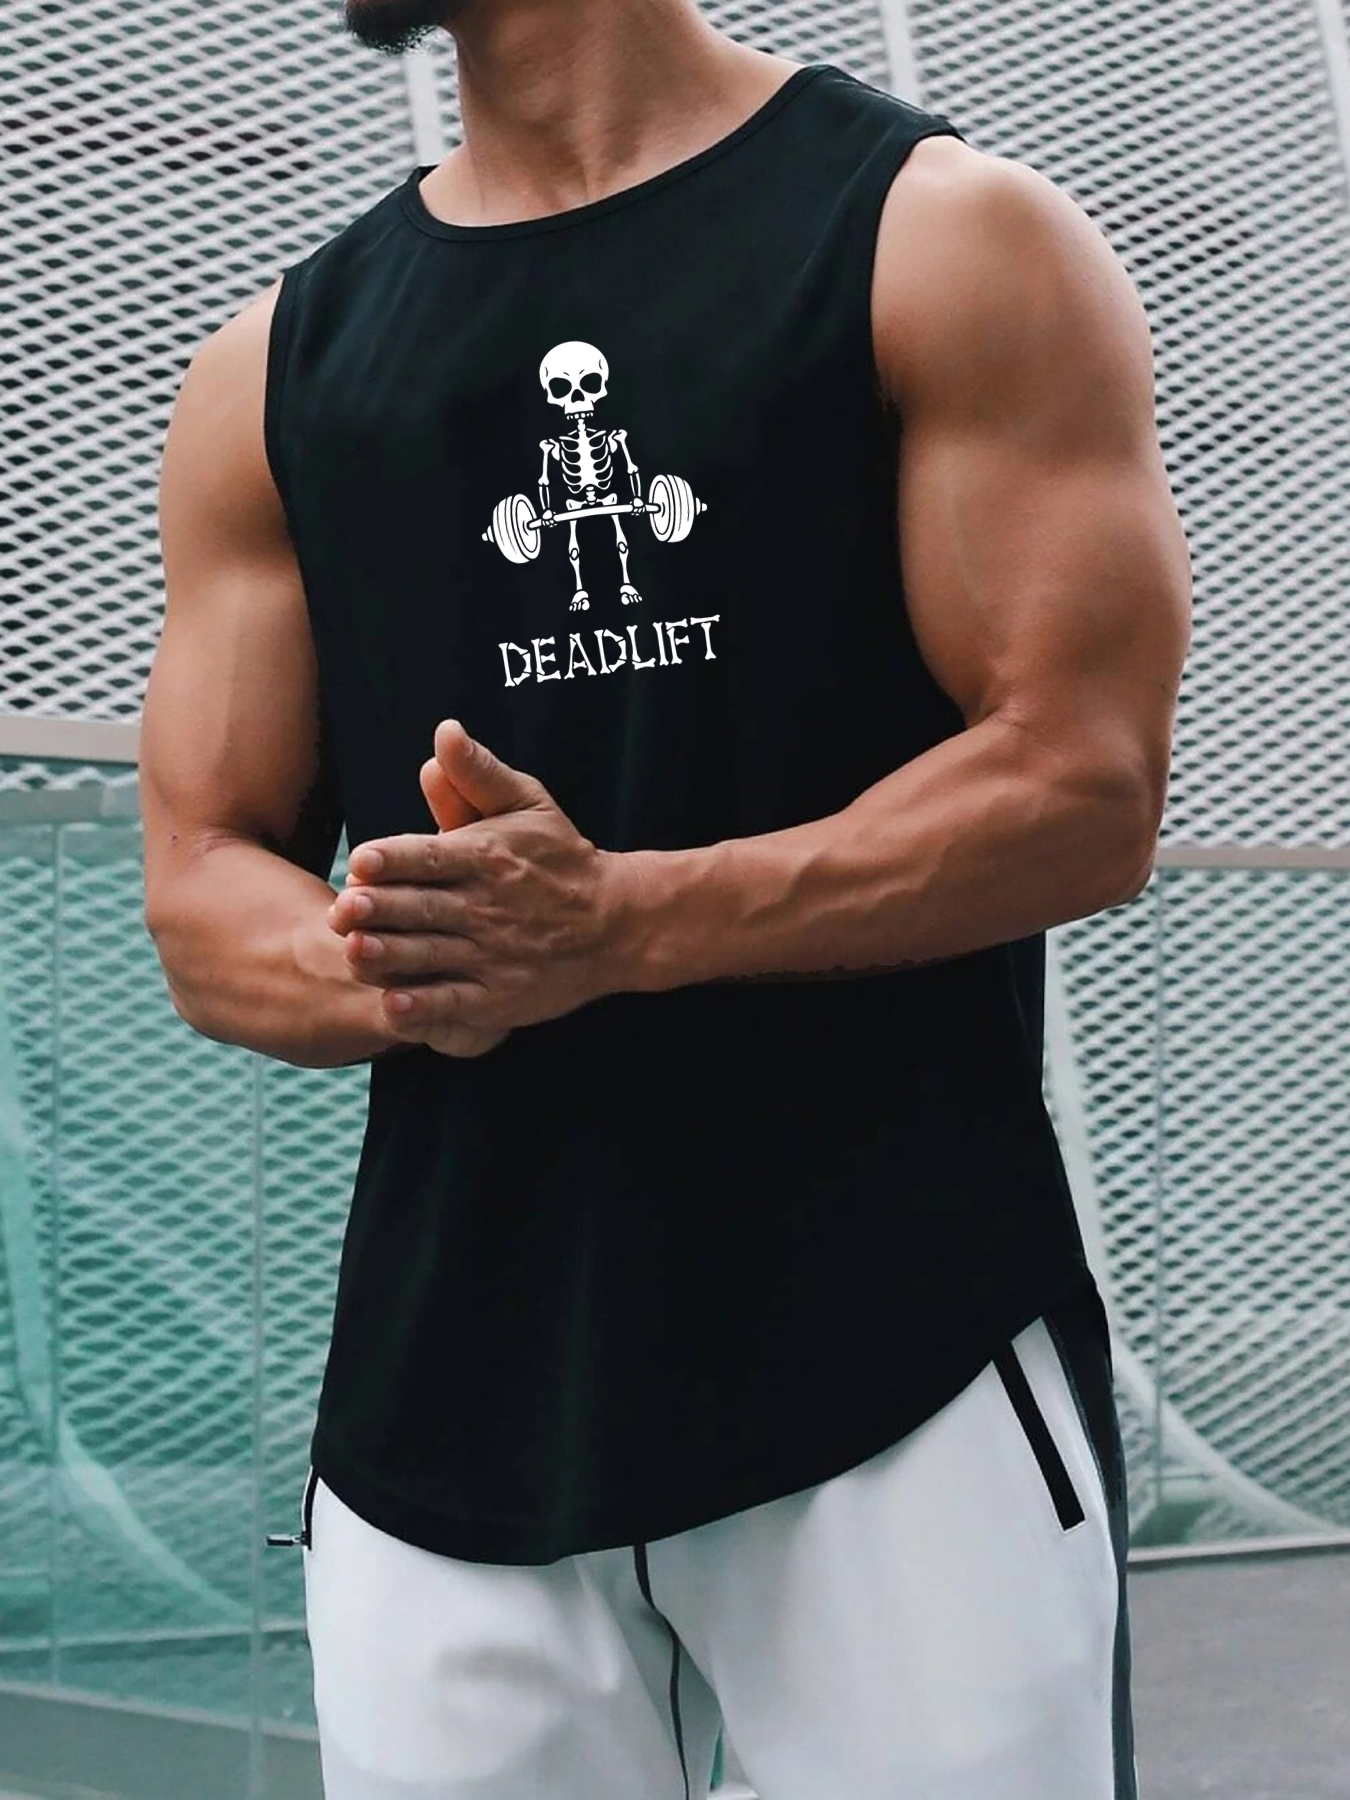 Summer New Y2K Sleeveless Top Men Muscle Tshirt Sporting Gym Clothing Mens  Sport Fitness Black Tank Tops Man Camiseta Gym Hombre